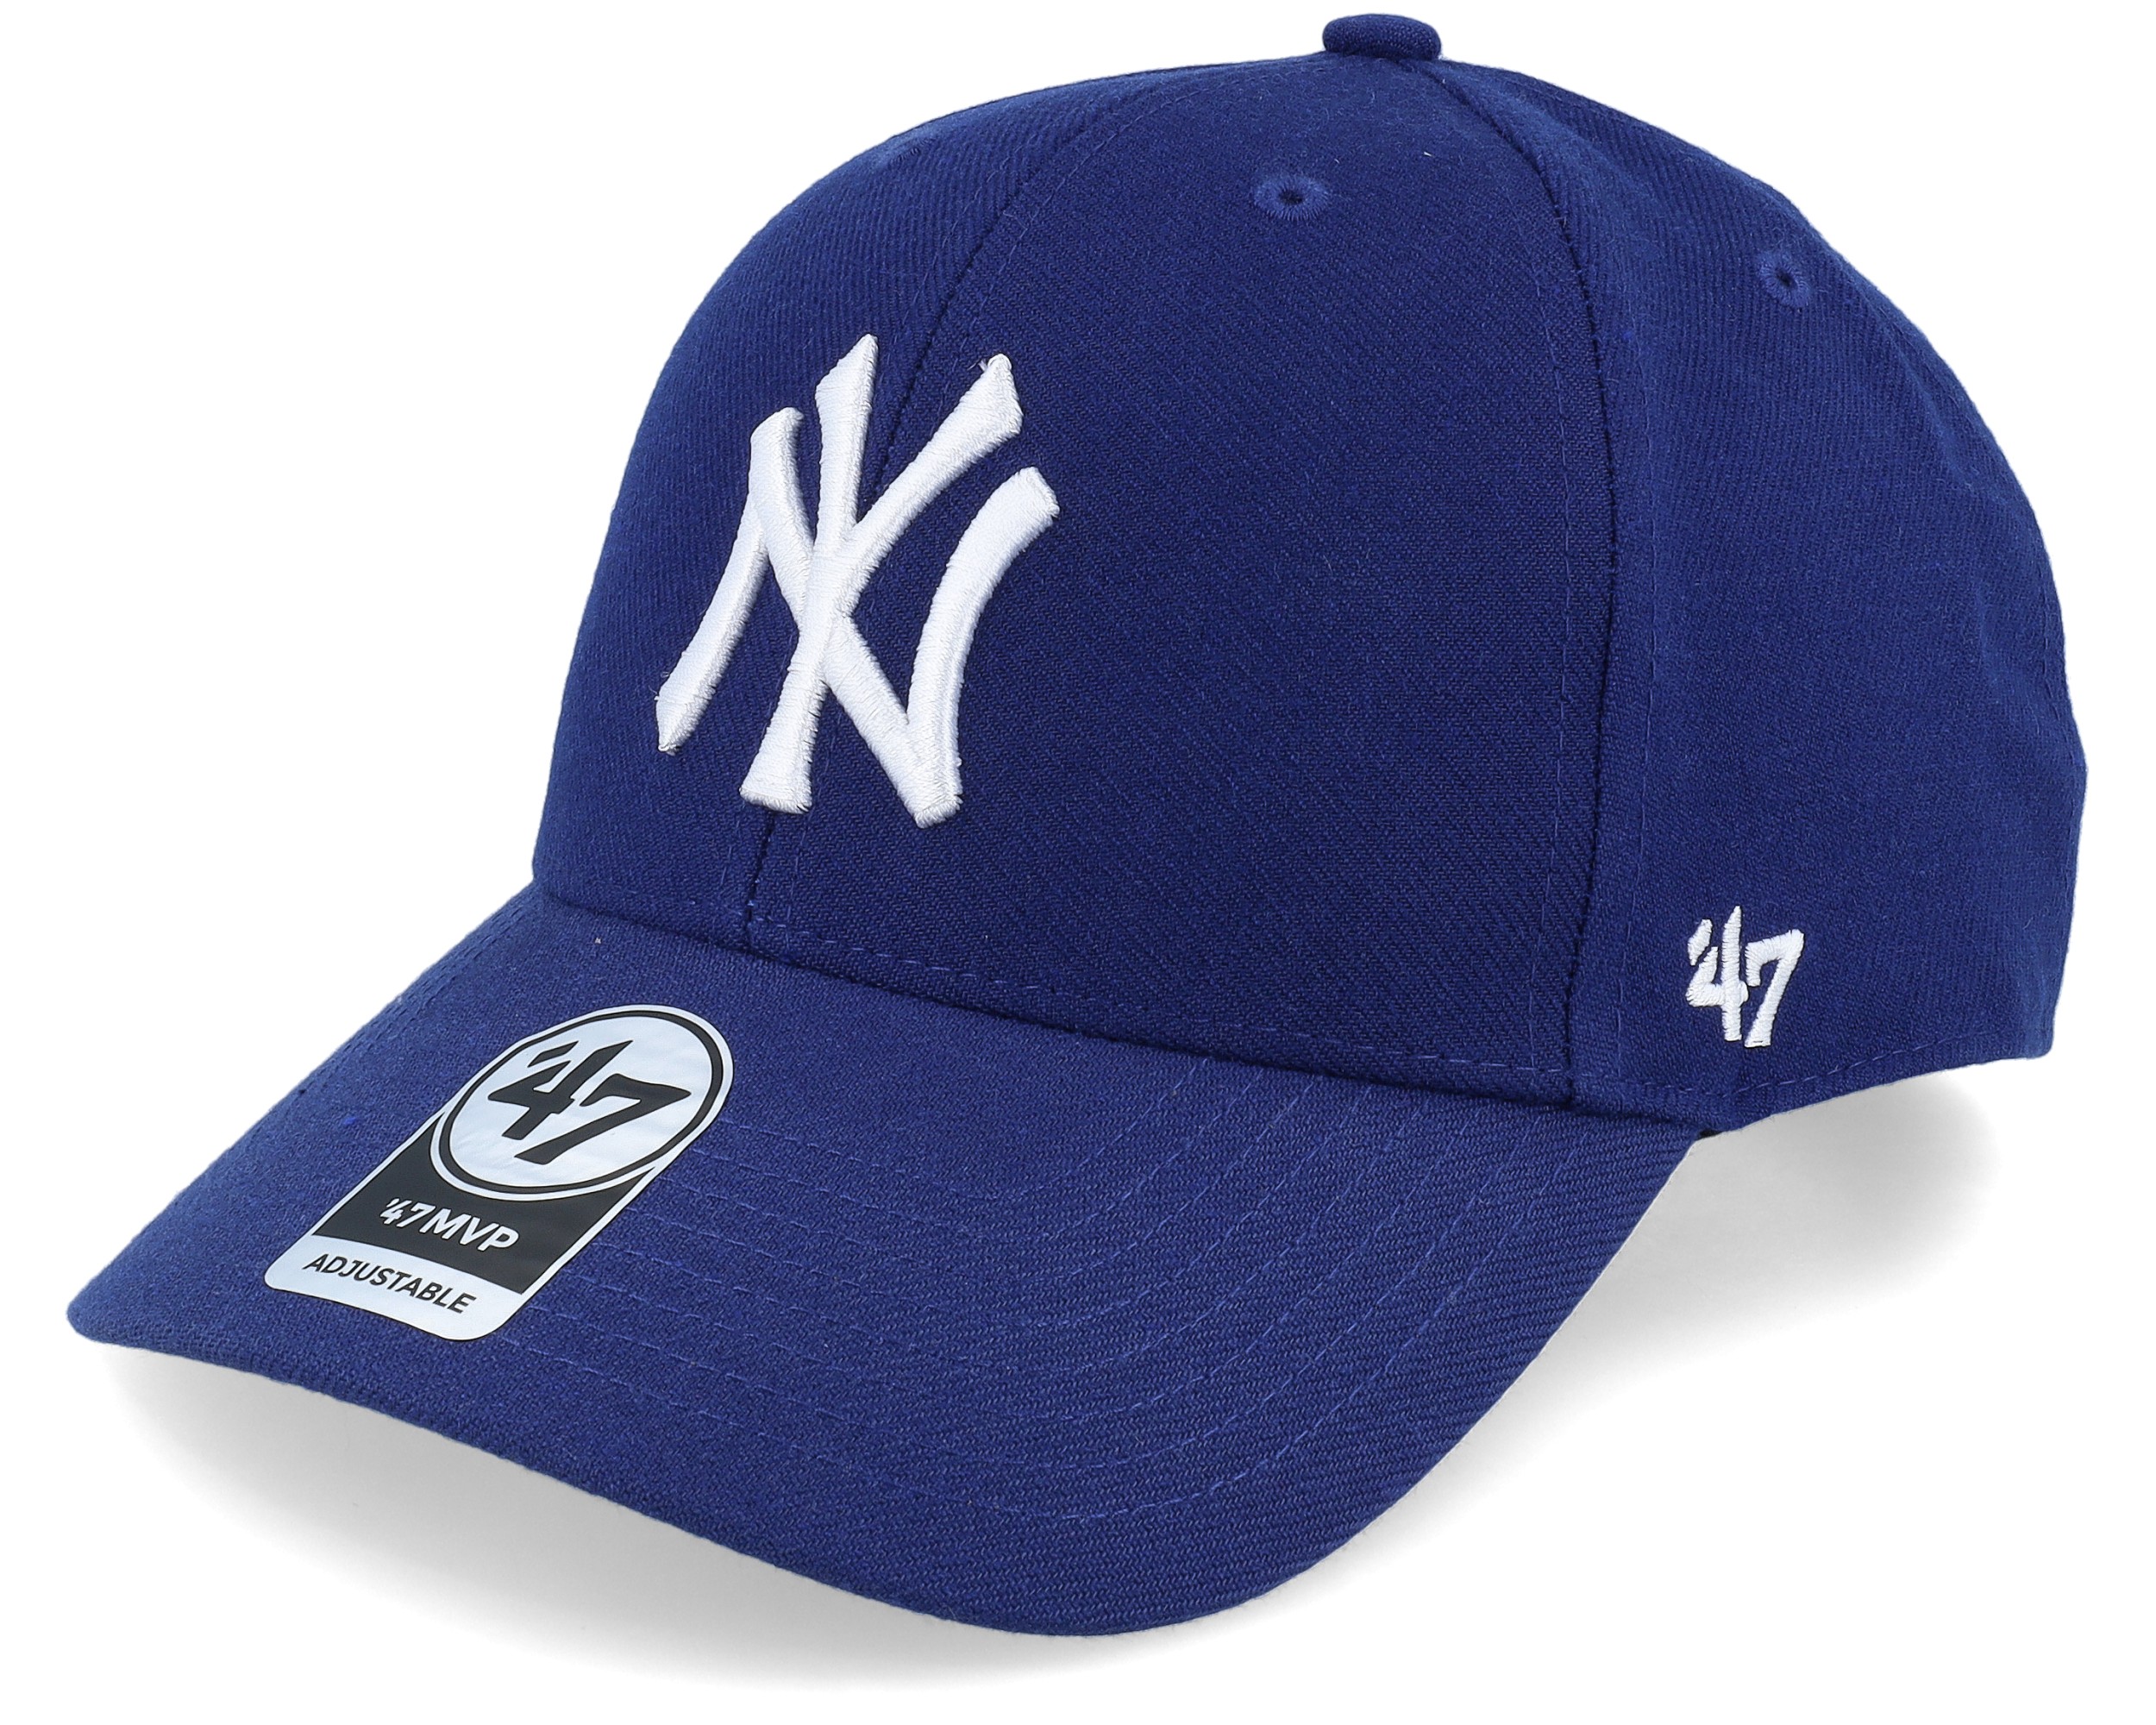 Petals & Peacocks x '47 NY Yankees Strapback Hat